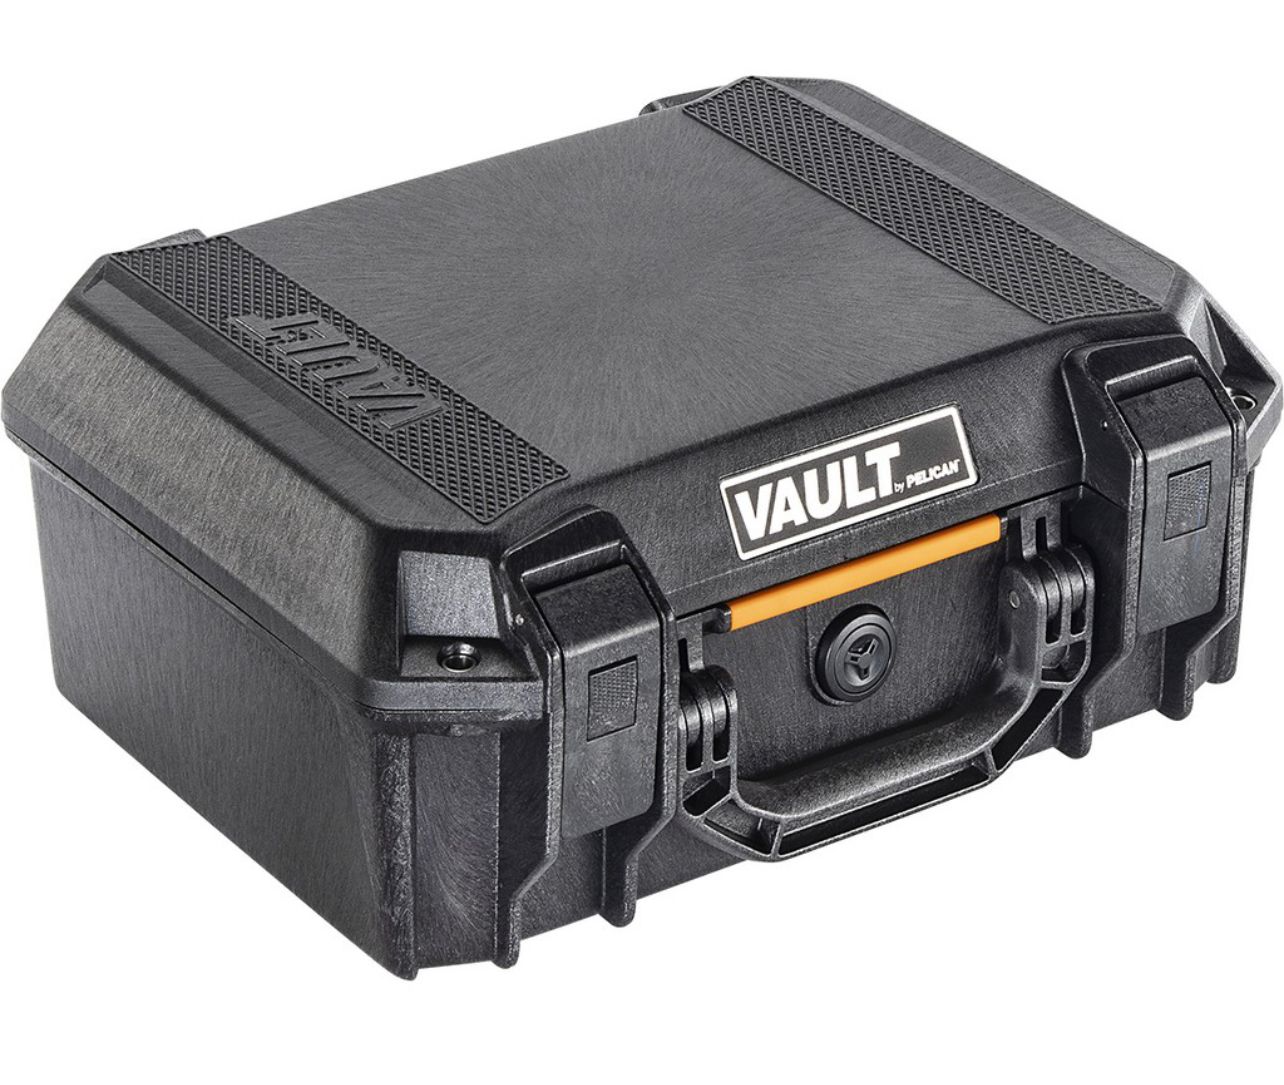 Pelican V200 Vault Medium Case with Foam Black-Limited Lifetime Local Warranty